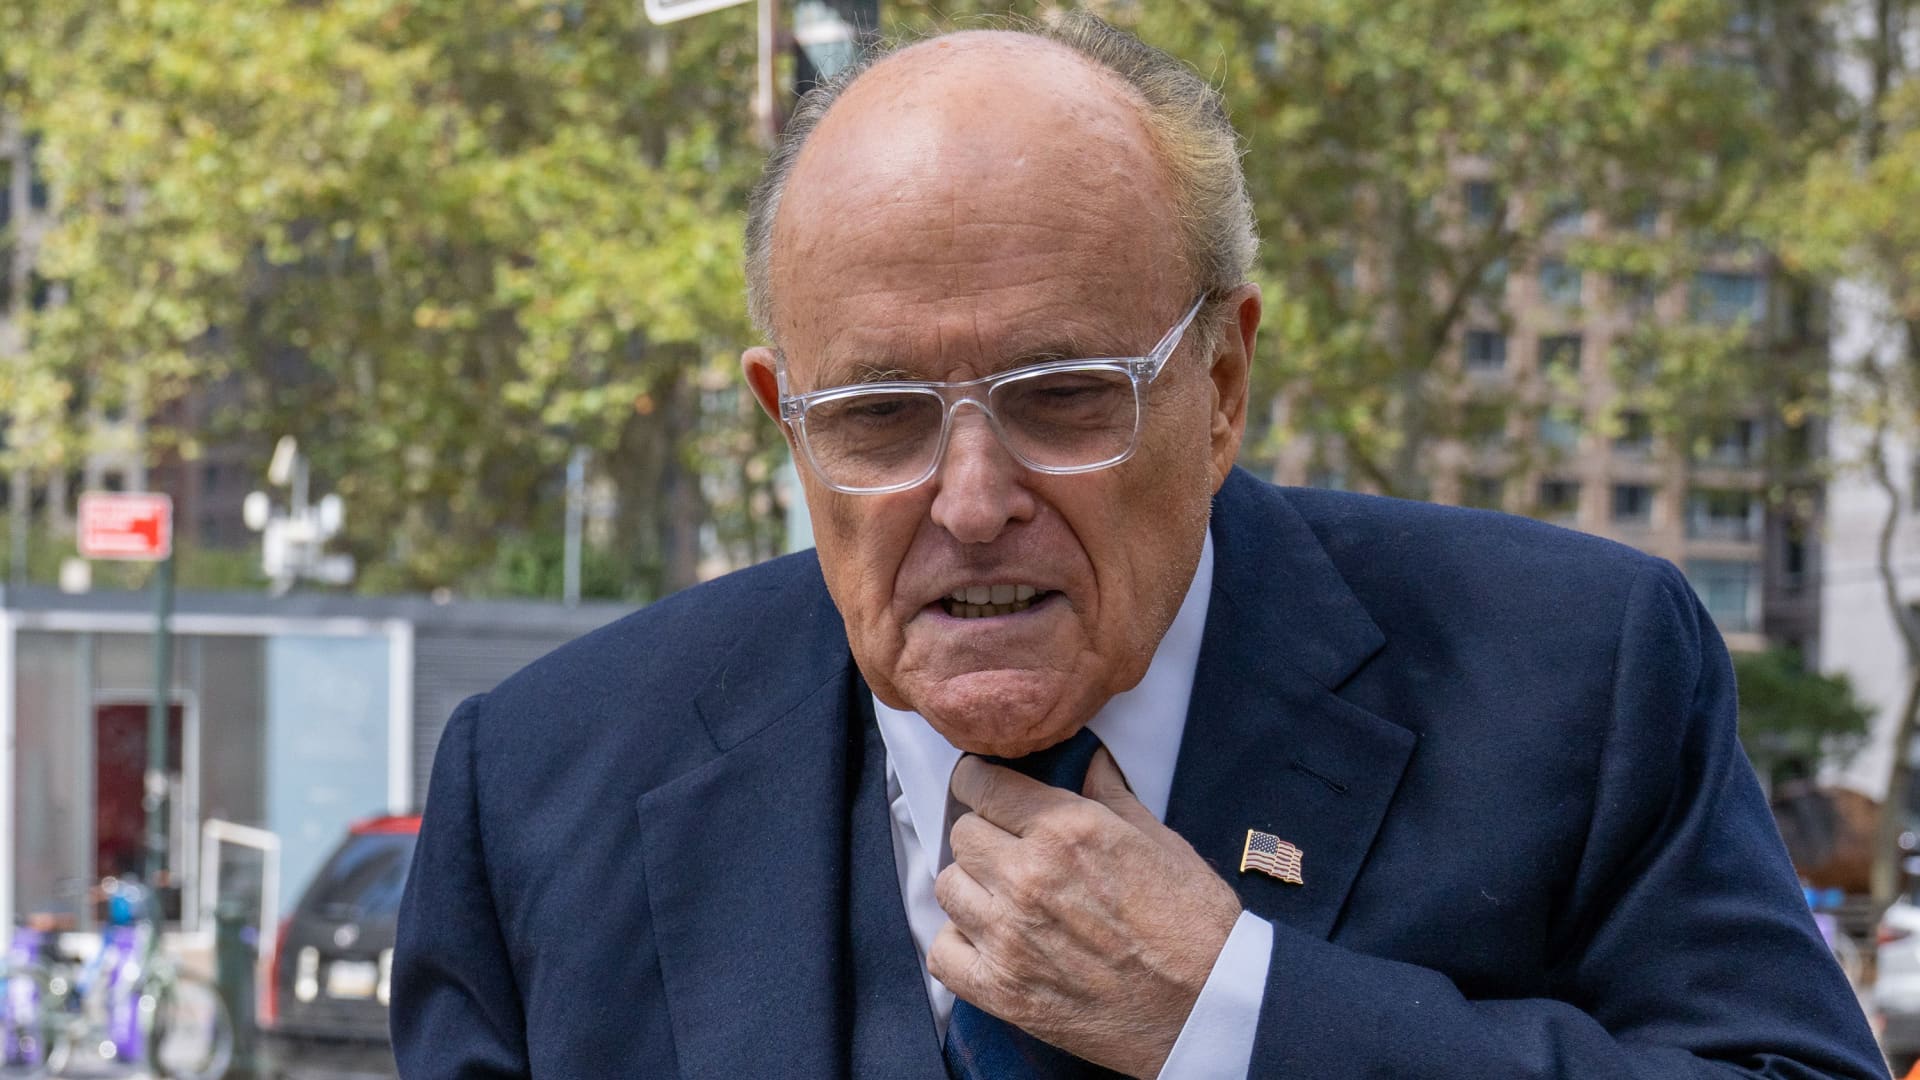 Early Life and Career of Rudy Giuliani